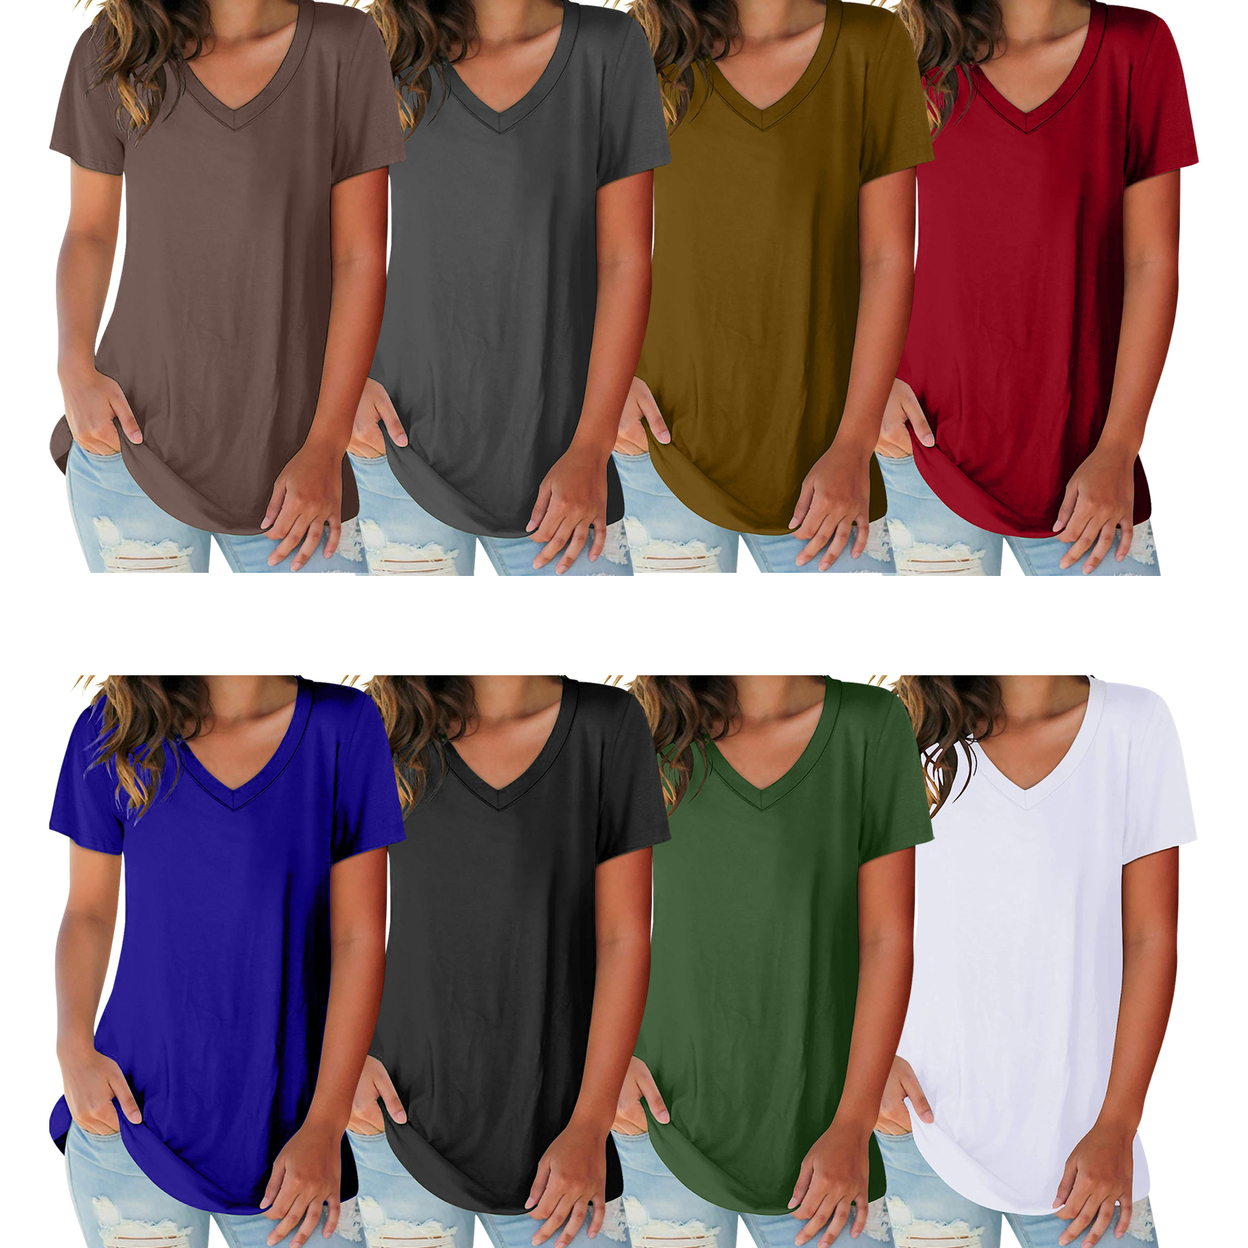 2-Pack: Women's Ultra Soft Smooth Cotton Blend Basic V-Neck Short Sleeve Shirts - Black & White, Medium